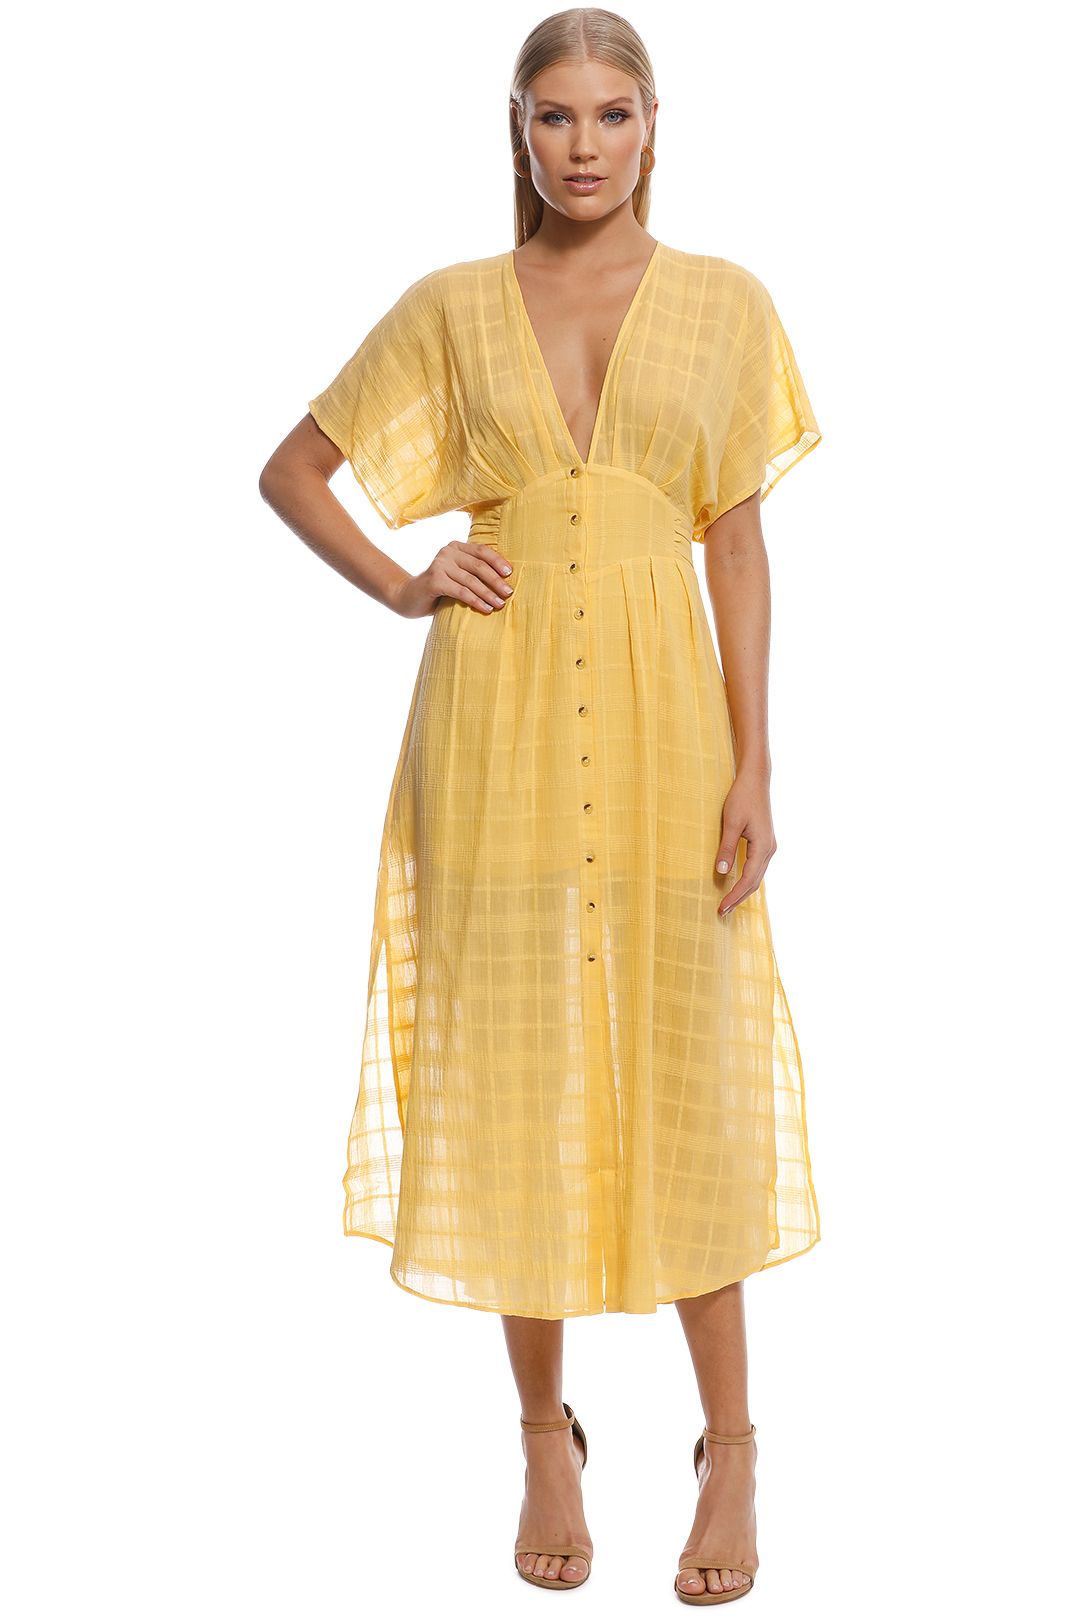 Suboo - Morning Light Ruffled Midi Dress - Yellow - Front